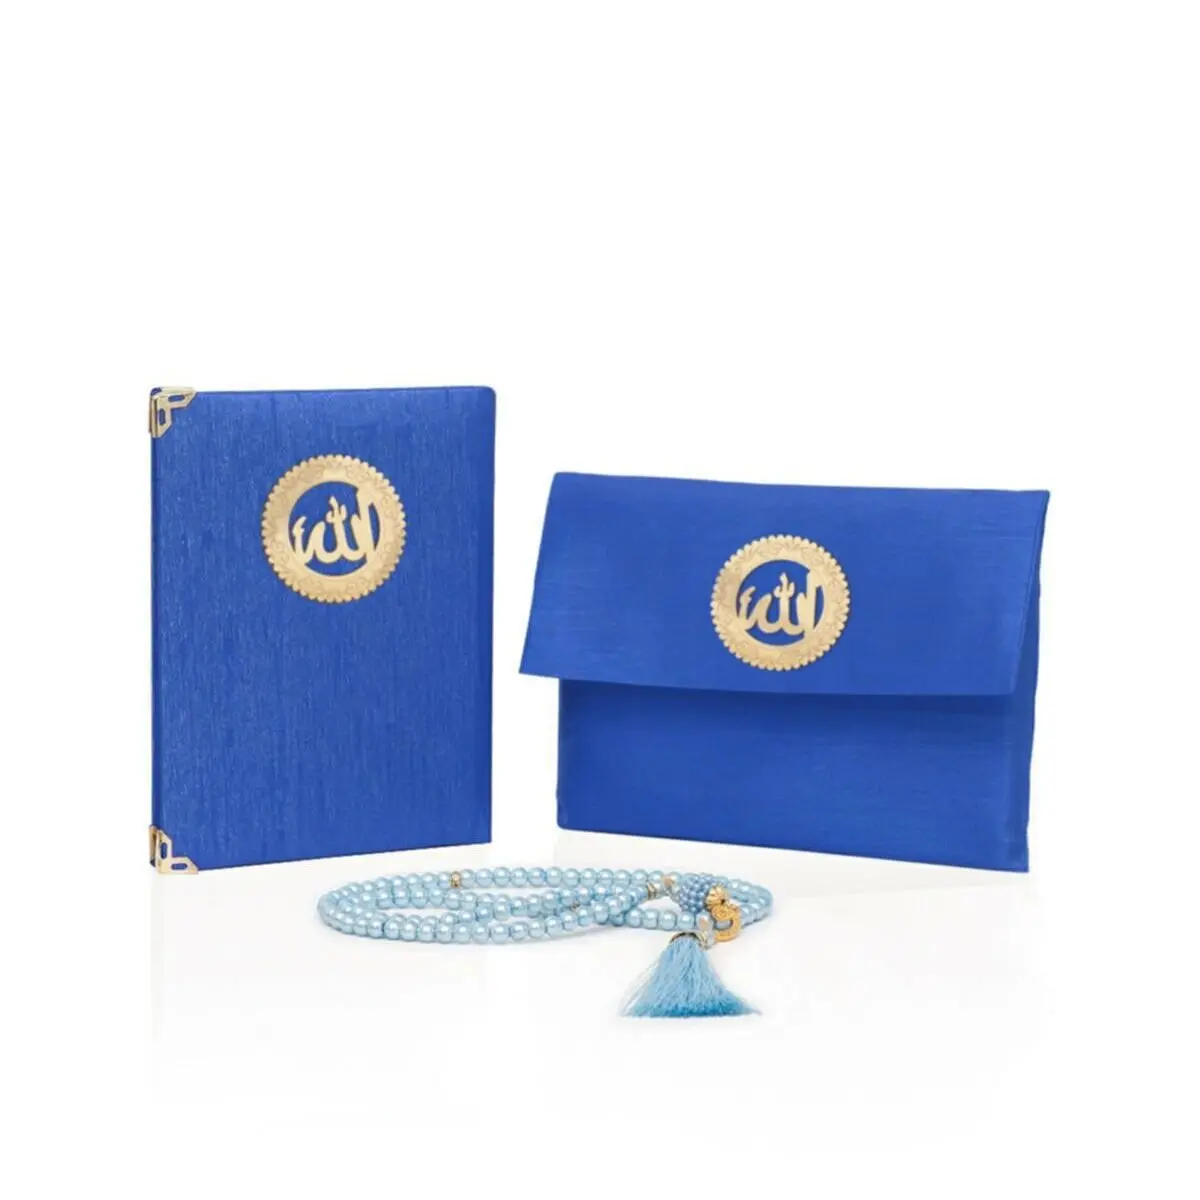 3 Pieces Muslim Set black blue seyahat bag Arabic Islamic Product Mevlüt Umrah Gift Sijada | Yasini Şerif book | 99 Beads Rosary